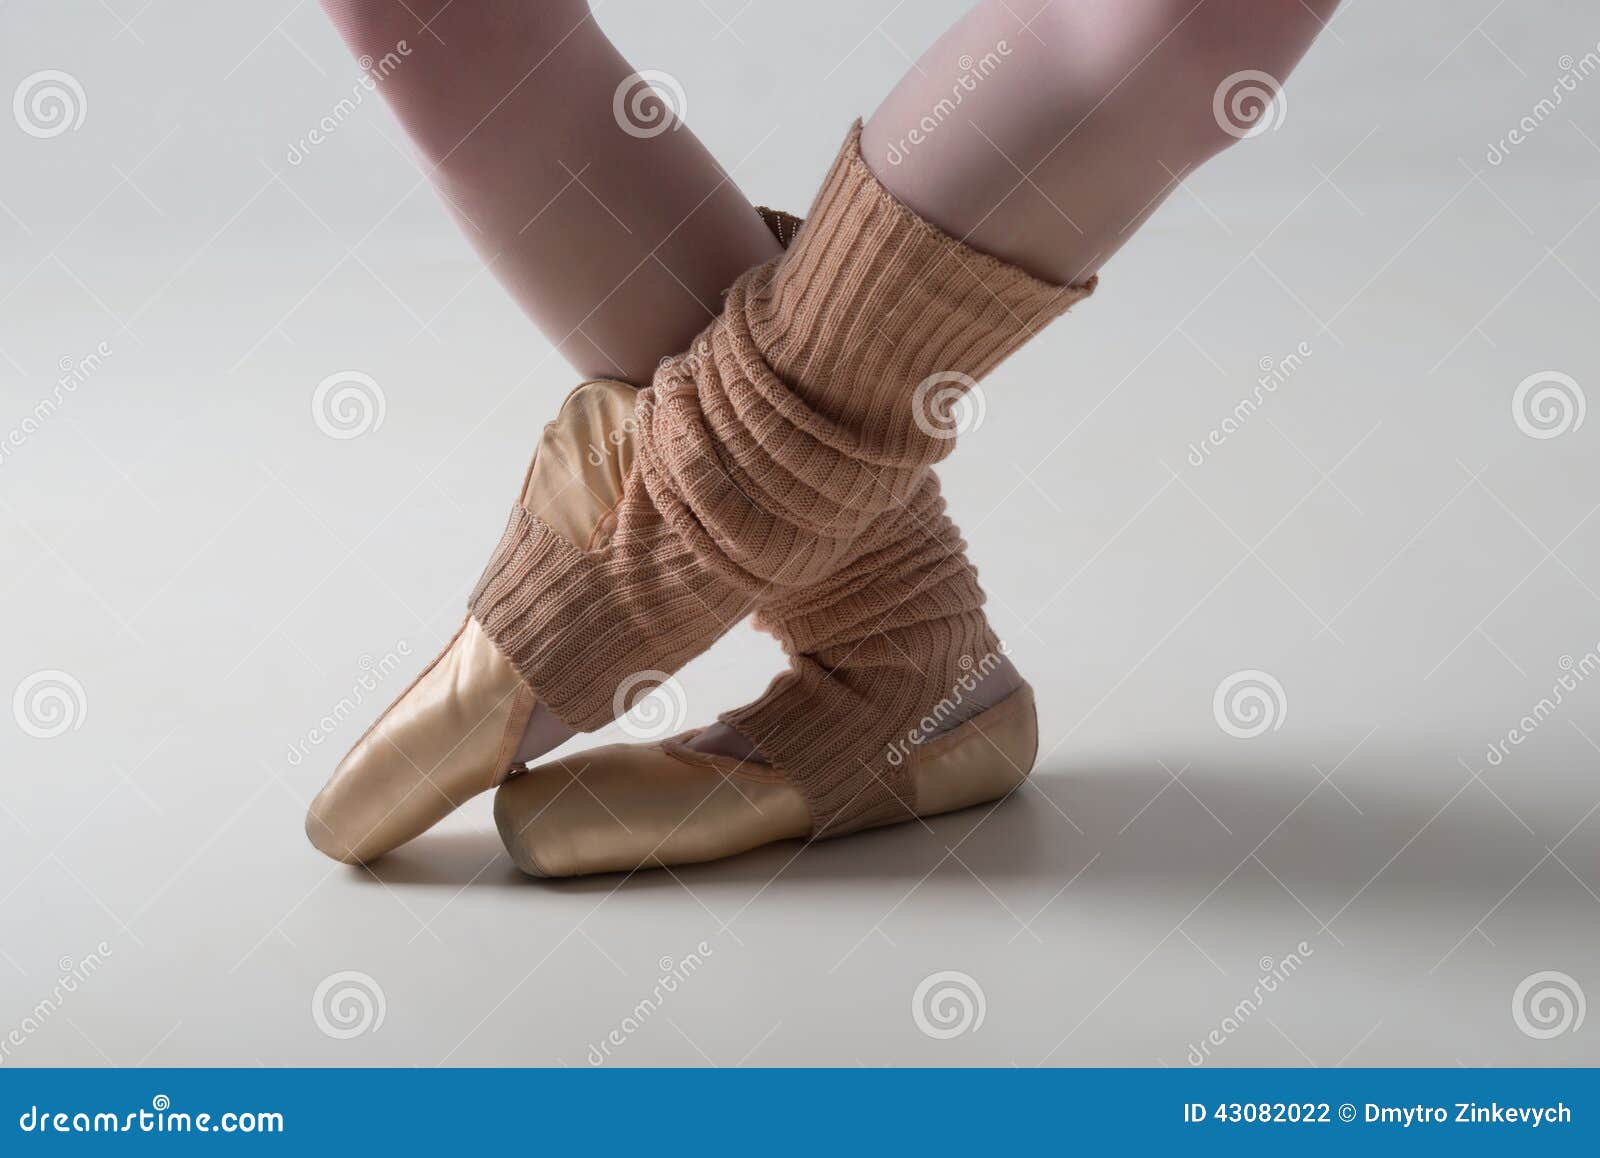 https://thumbs.dreamstime.com/z/closeup-ballet-shoes-dancing-pointe-portrait-dancer-legs-long-socks-isolated-white-background-43082022.jpg